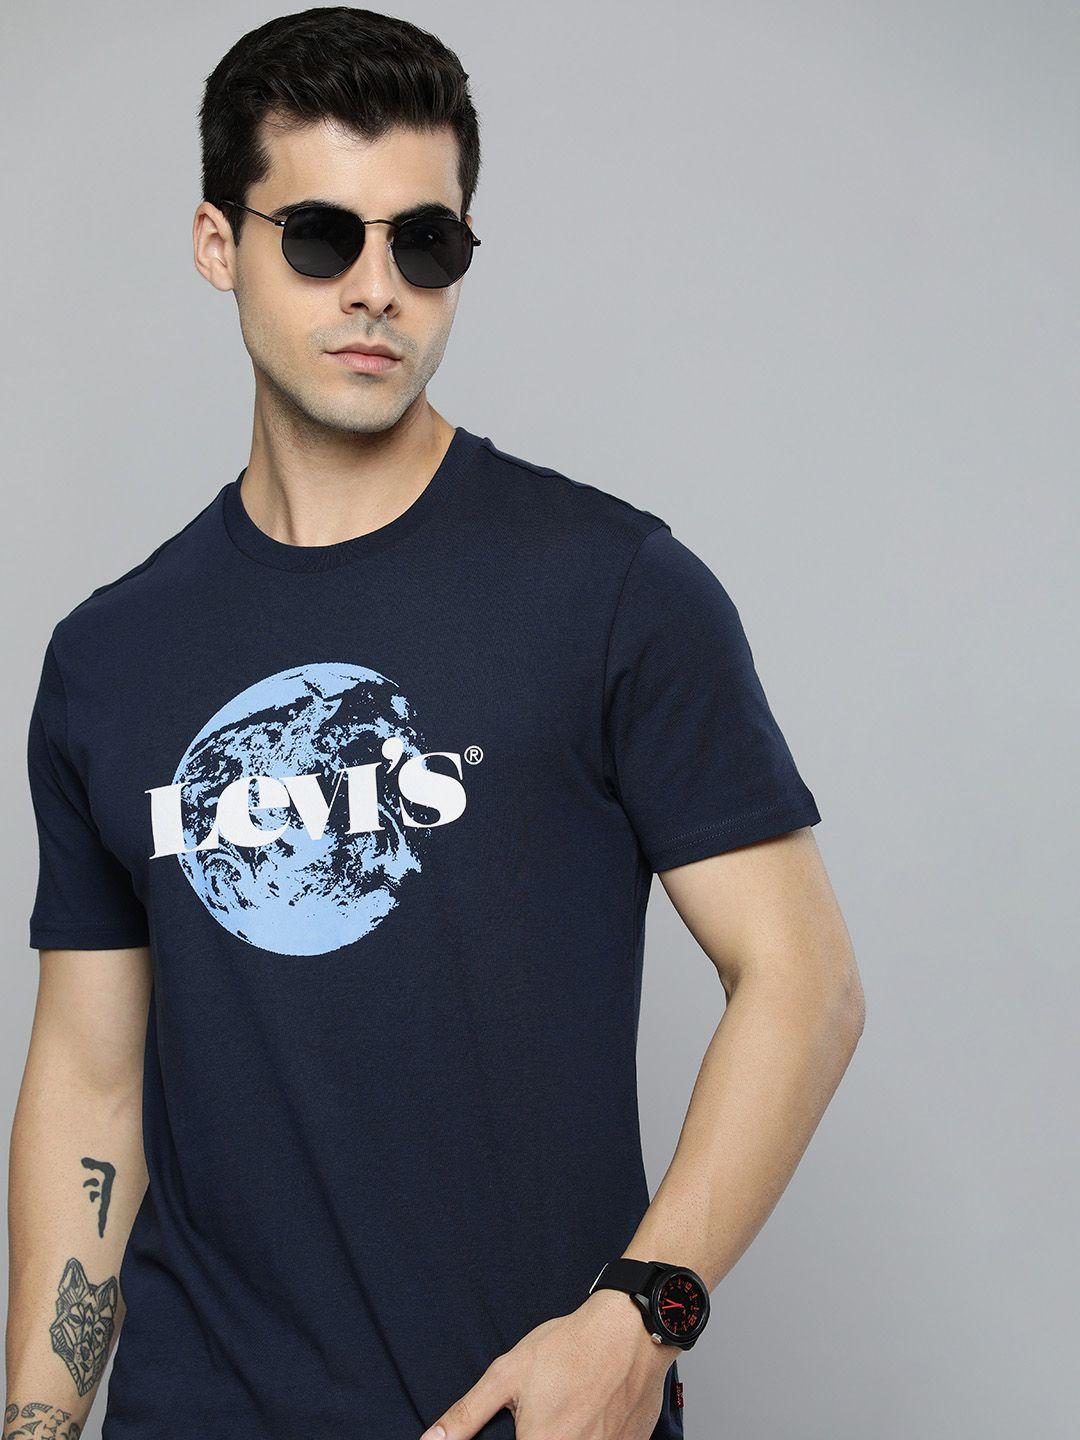 levis men navy blue & white brand logo printed pure cotton t-shirt